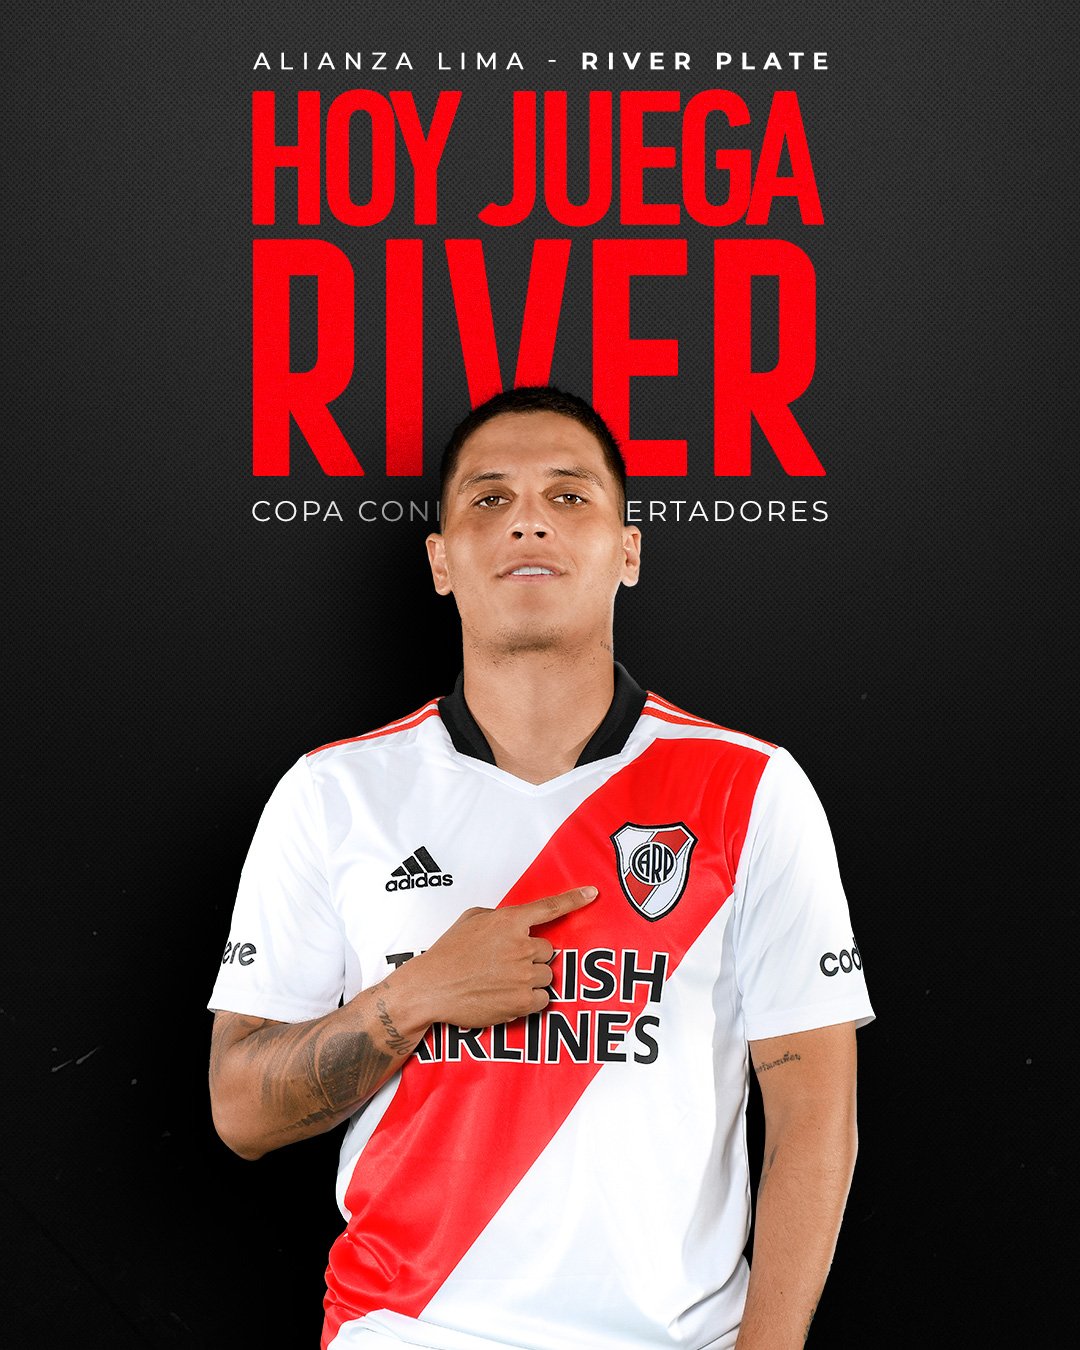 River Plate on Twitter: "¡HOY JUEGA RIVER! https://t.co/Gu41TlGJKe" /